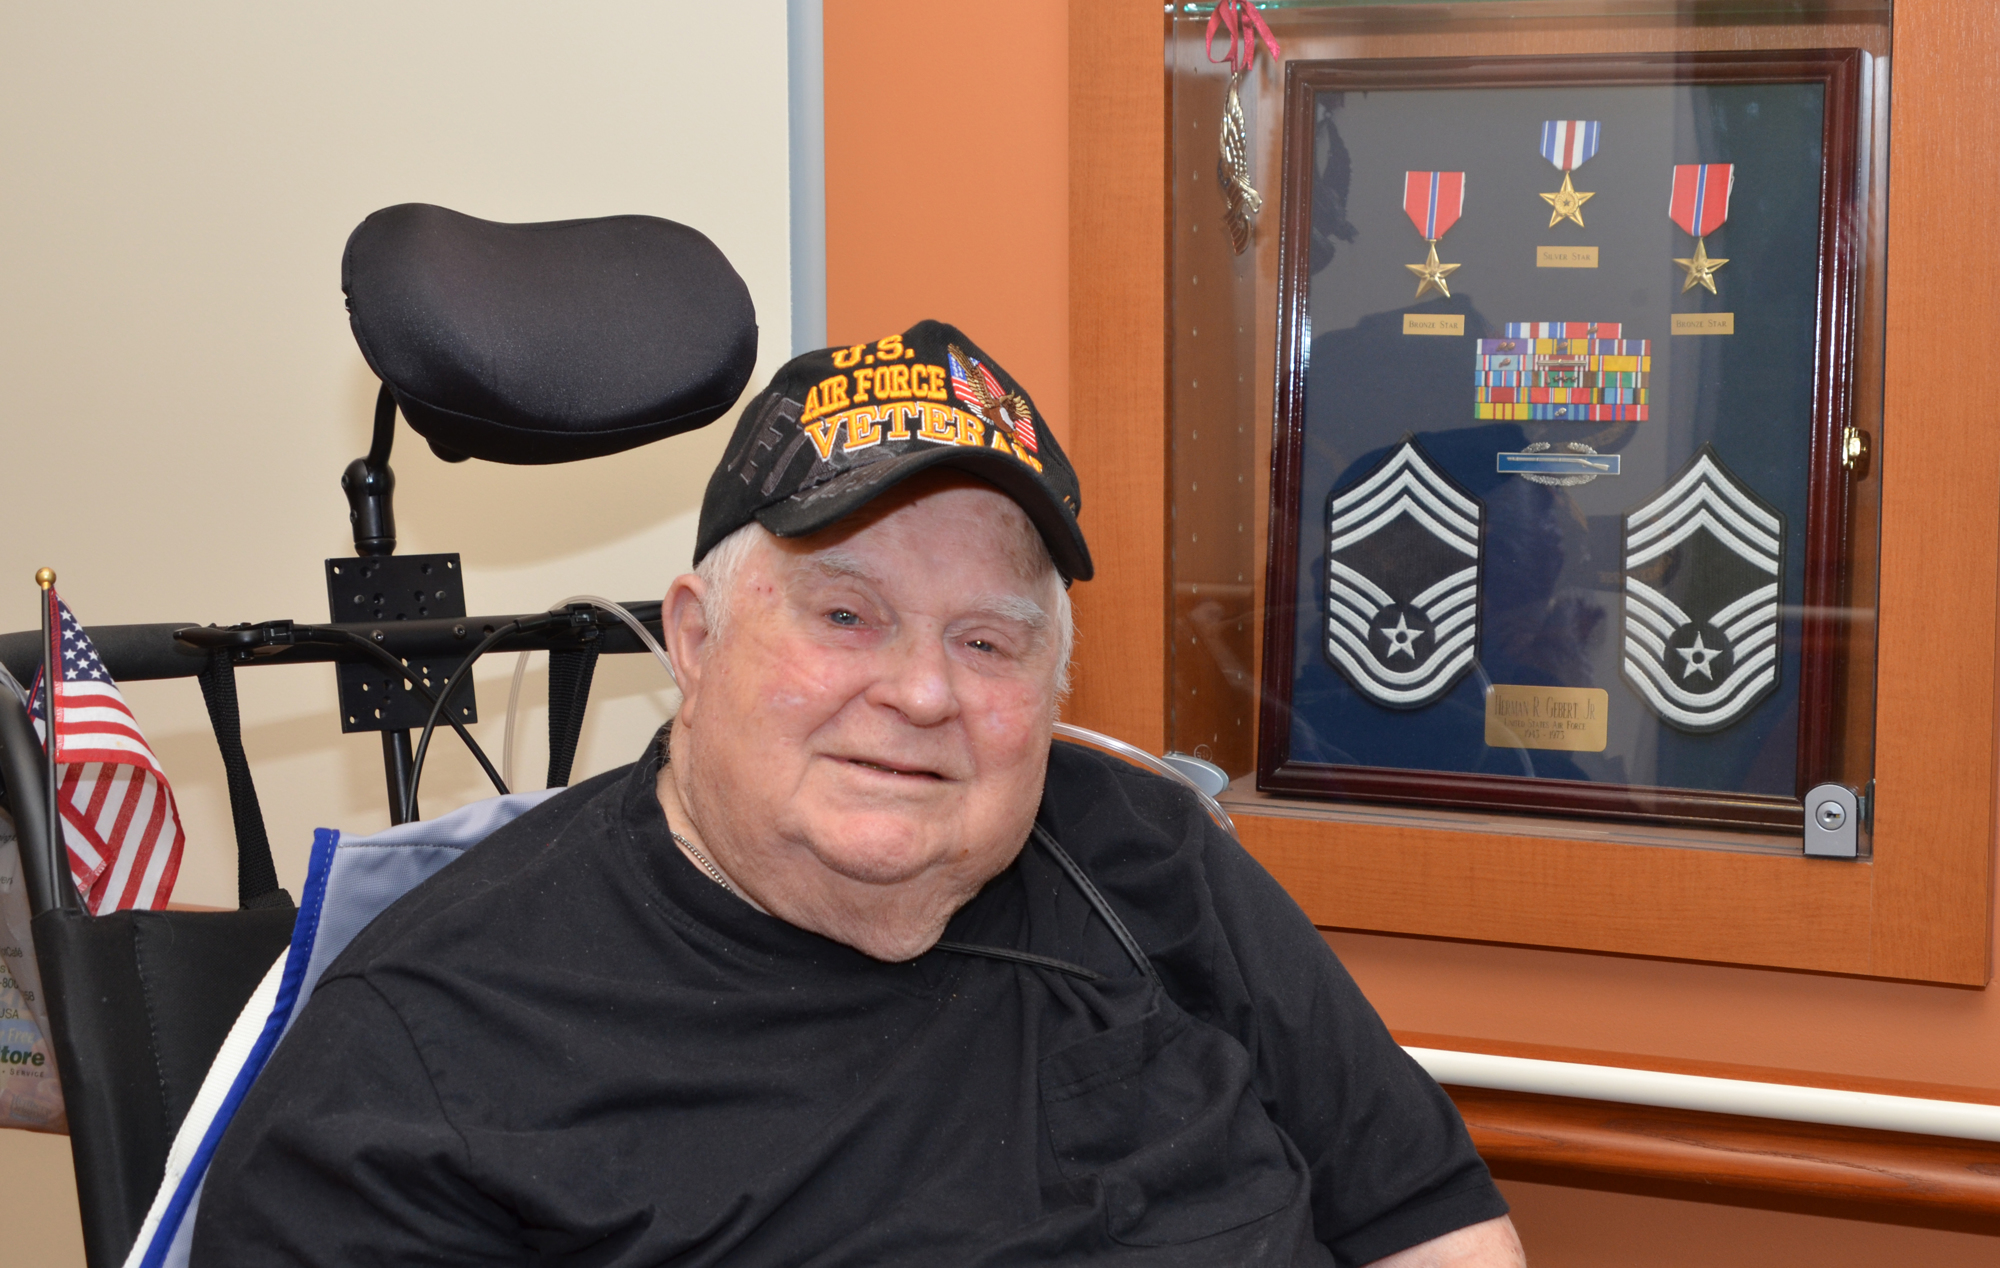 Herman R. Gebert Jr. resides in the Community Living Center at the Orlando Veterans Affairs Medical Center.